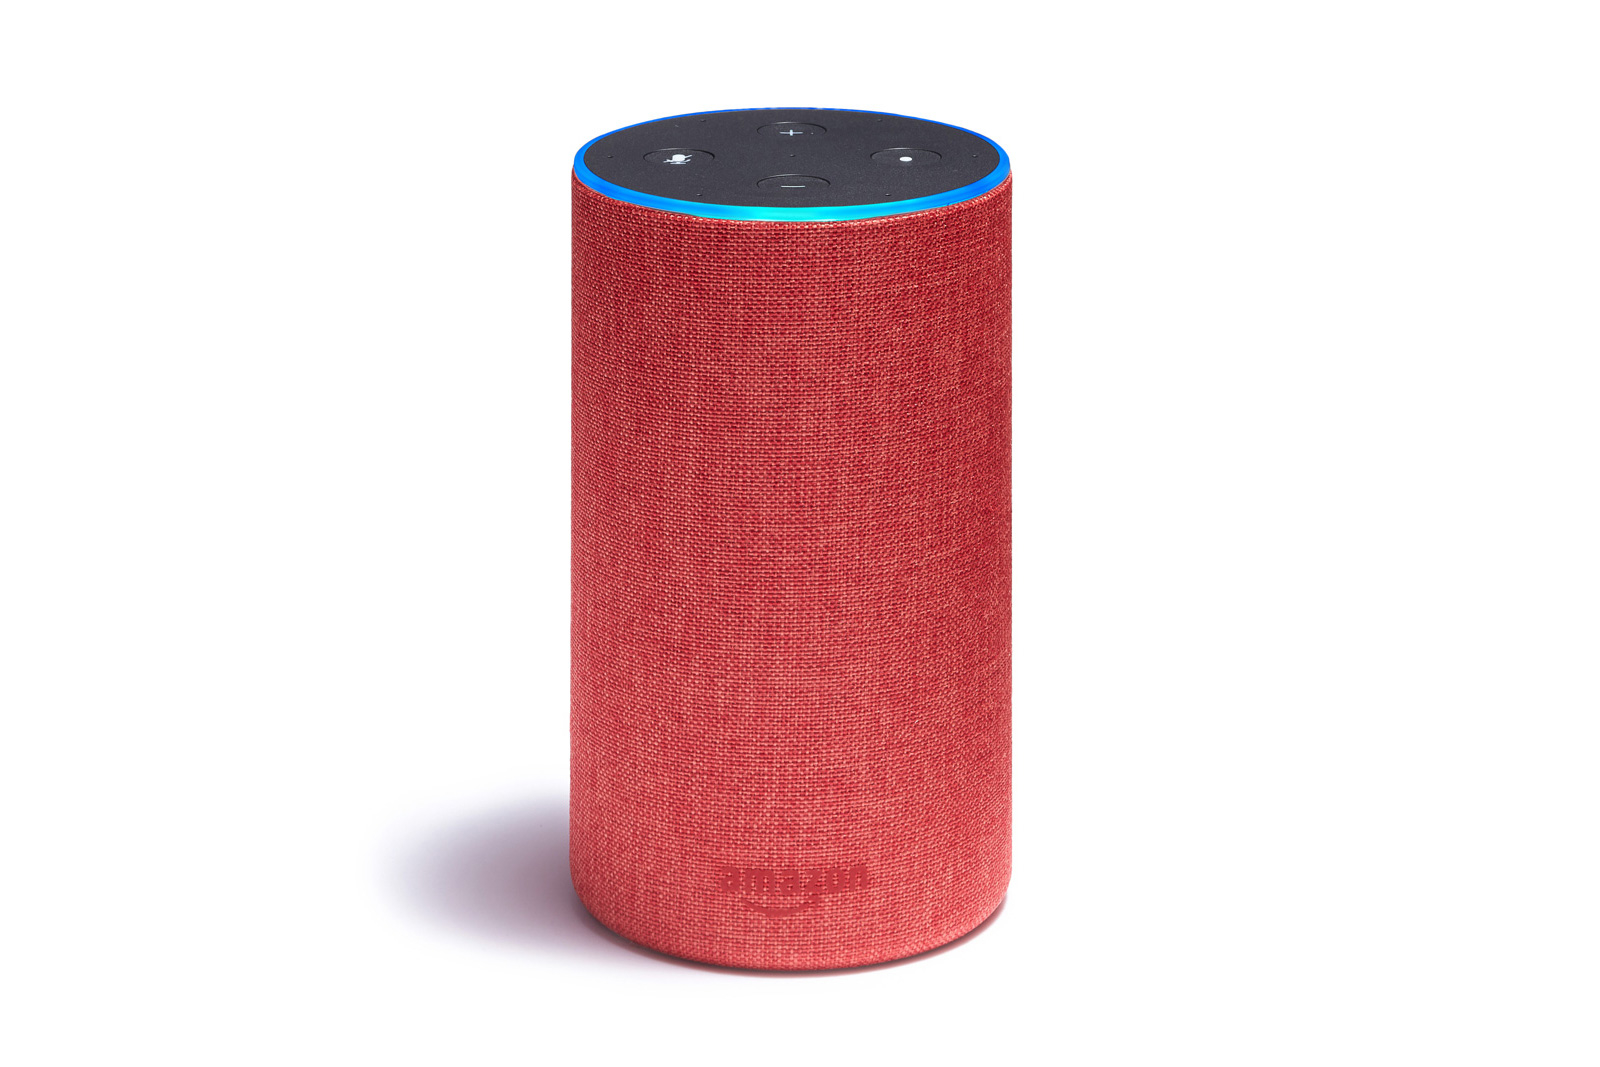 Представлена умная колонка для дома Amazon All-new Echo Product (RED) edition